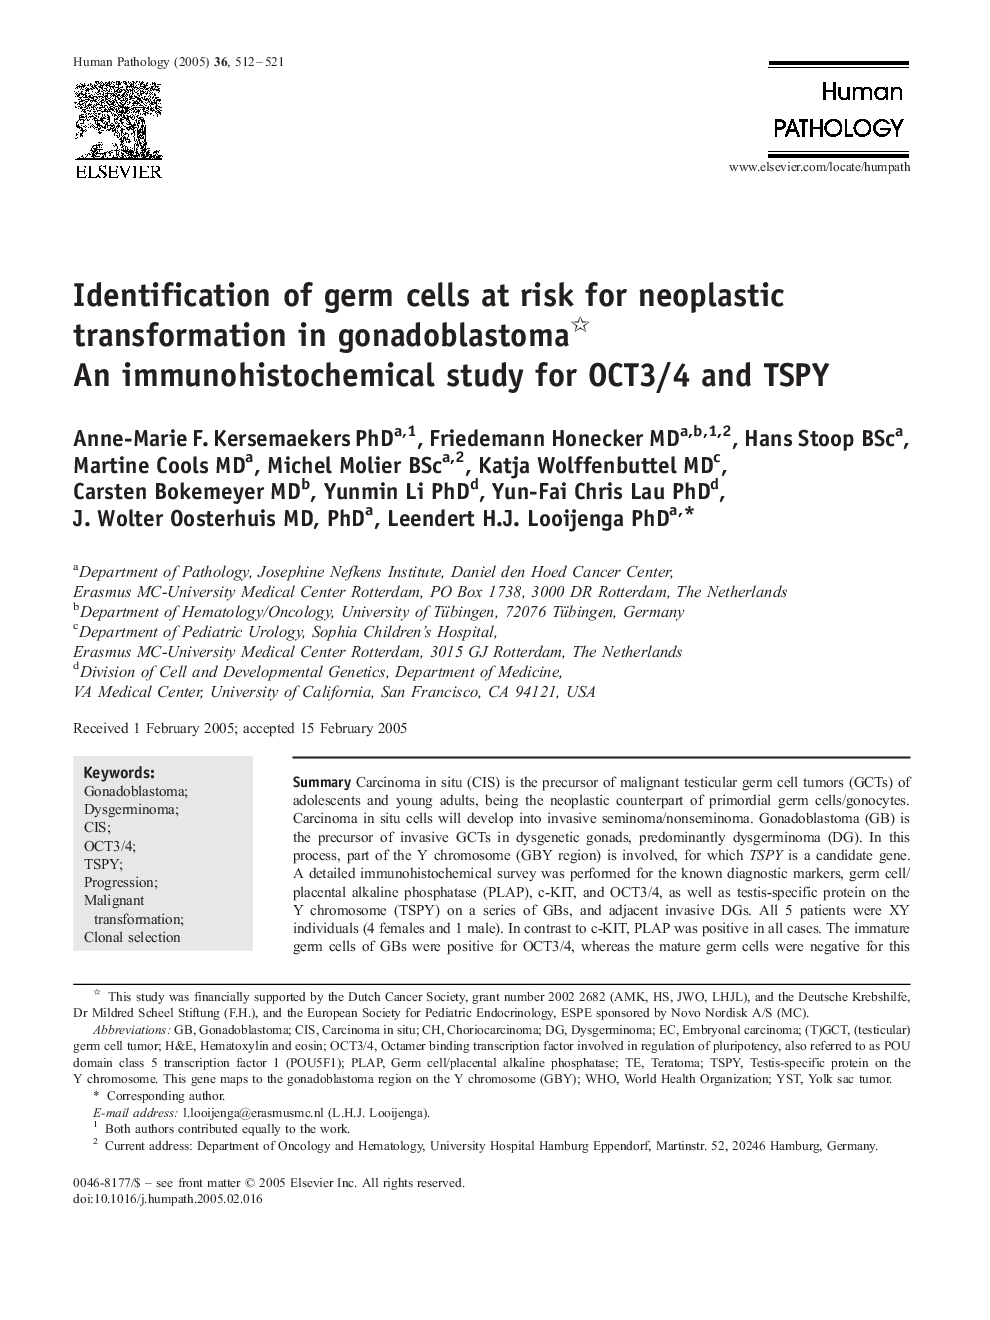 Identification of germ cells at risk for neoplastic transformation in gonadoblastoma